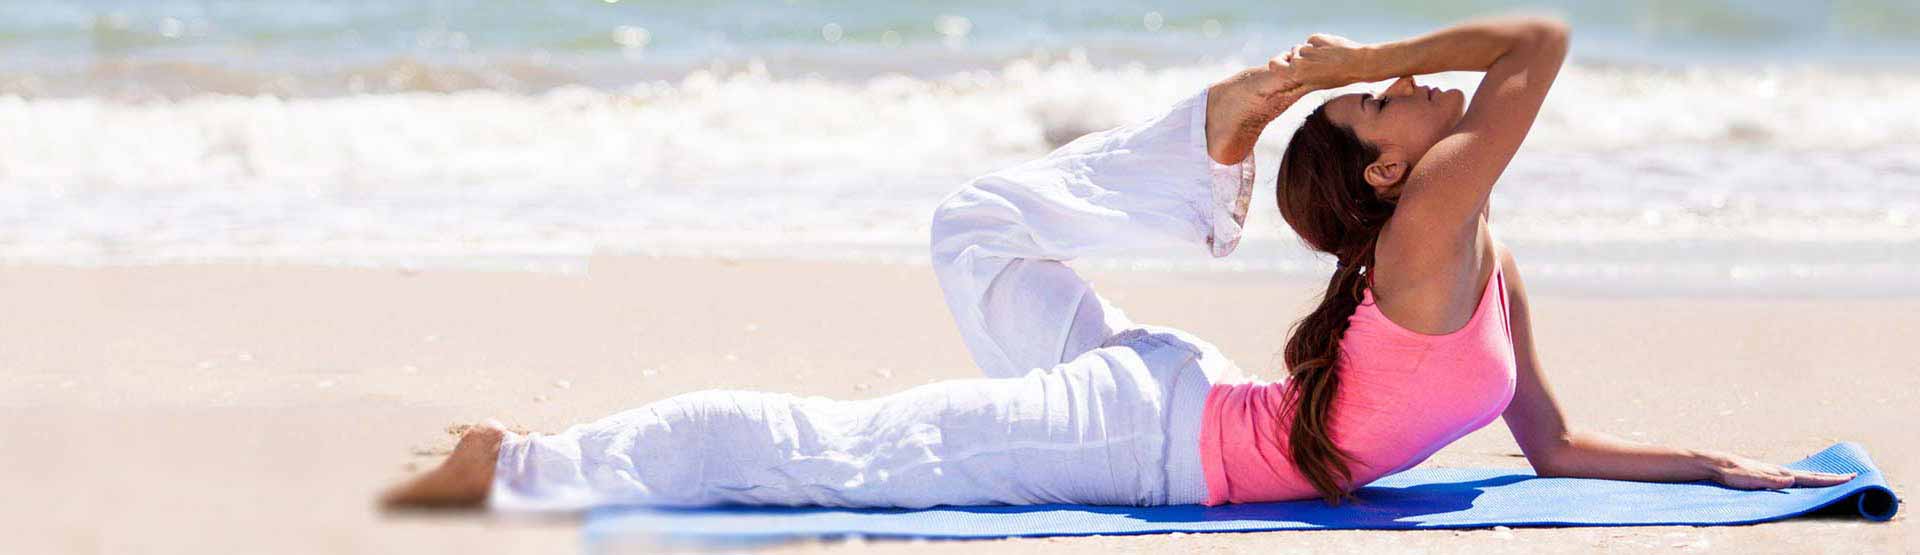 Yoga Ausbildung am Meer | 200h